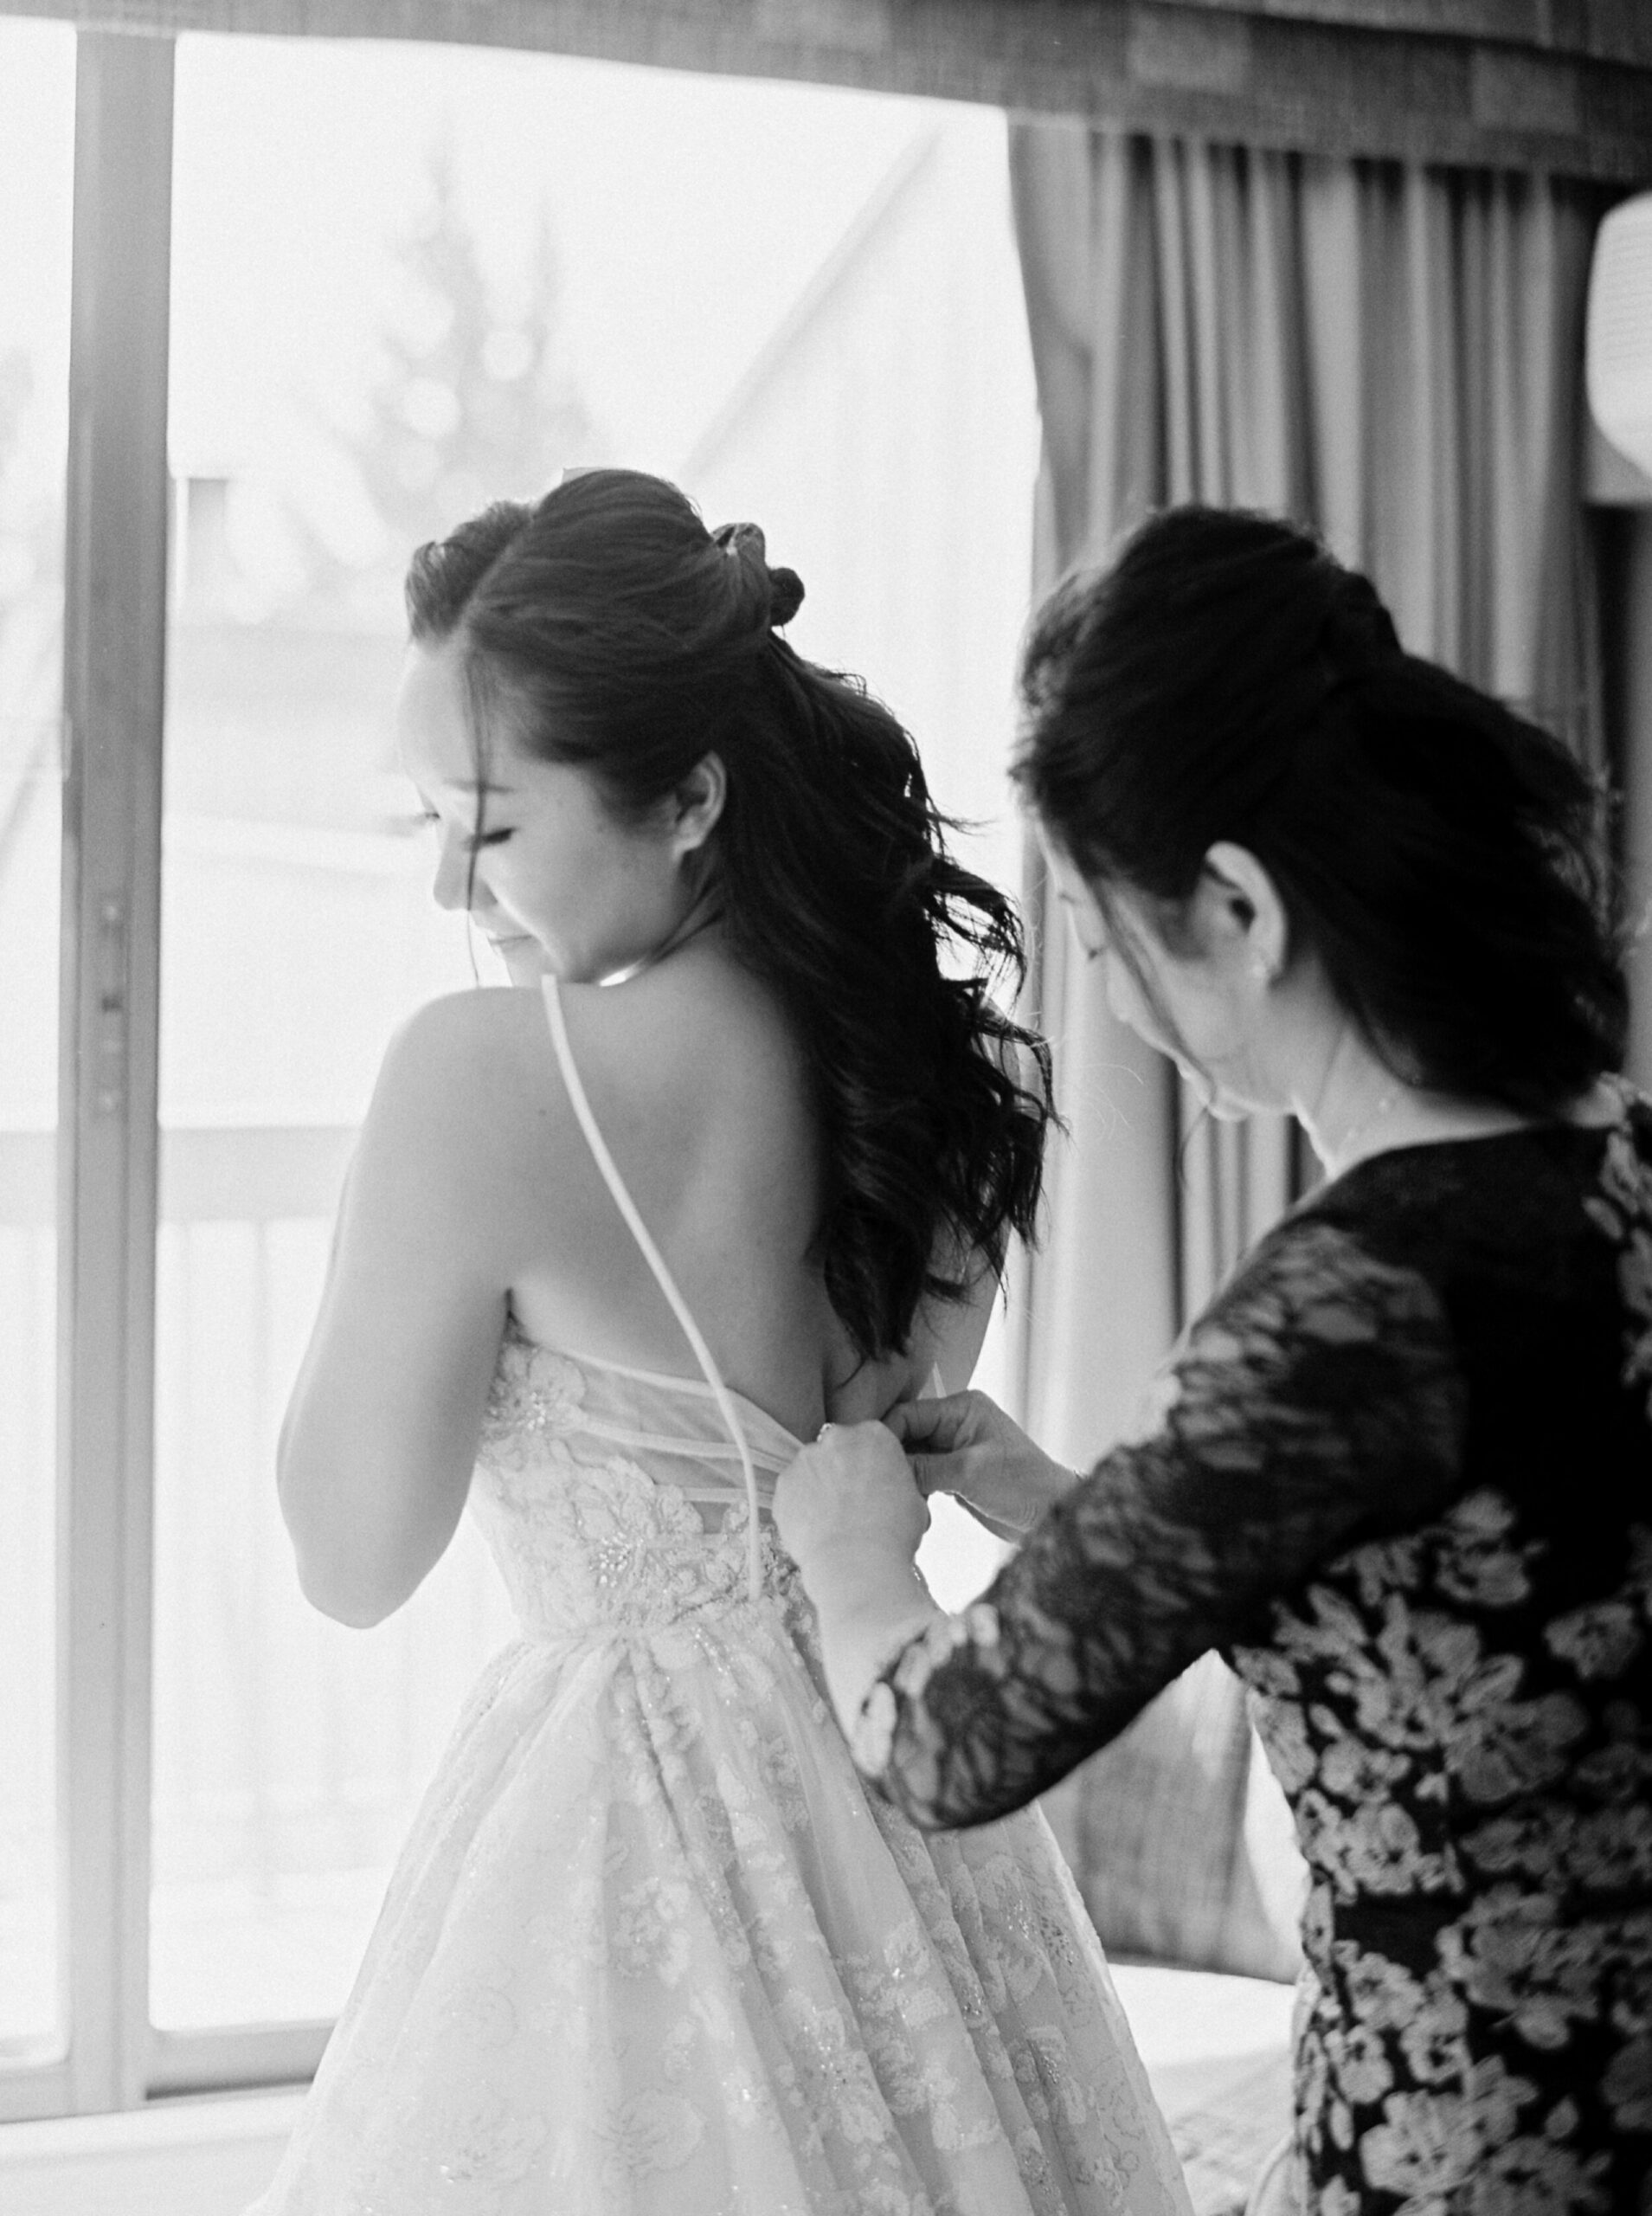  Banff wedding photographer | intimate wedding elopement | Bride getting ready details | Justine milton photography 